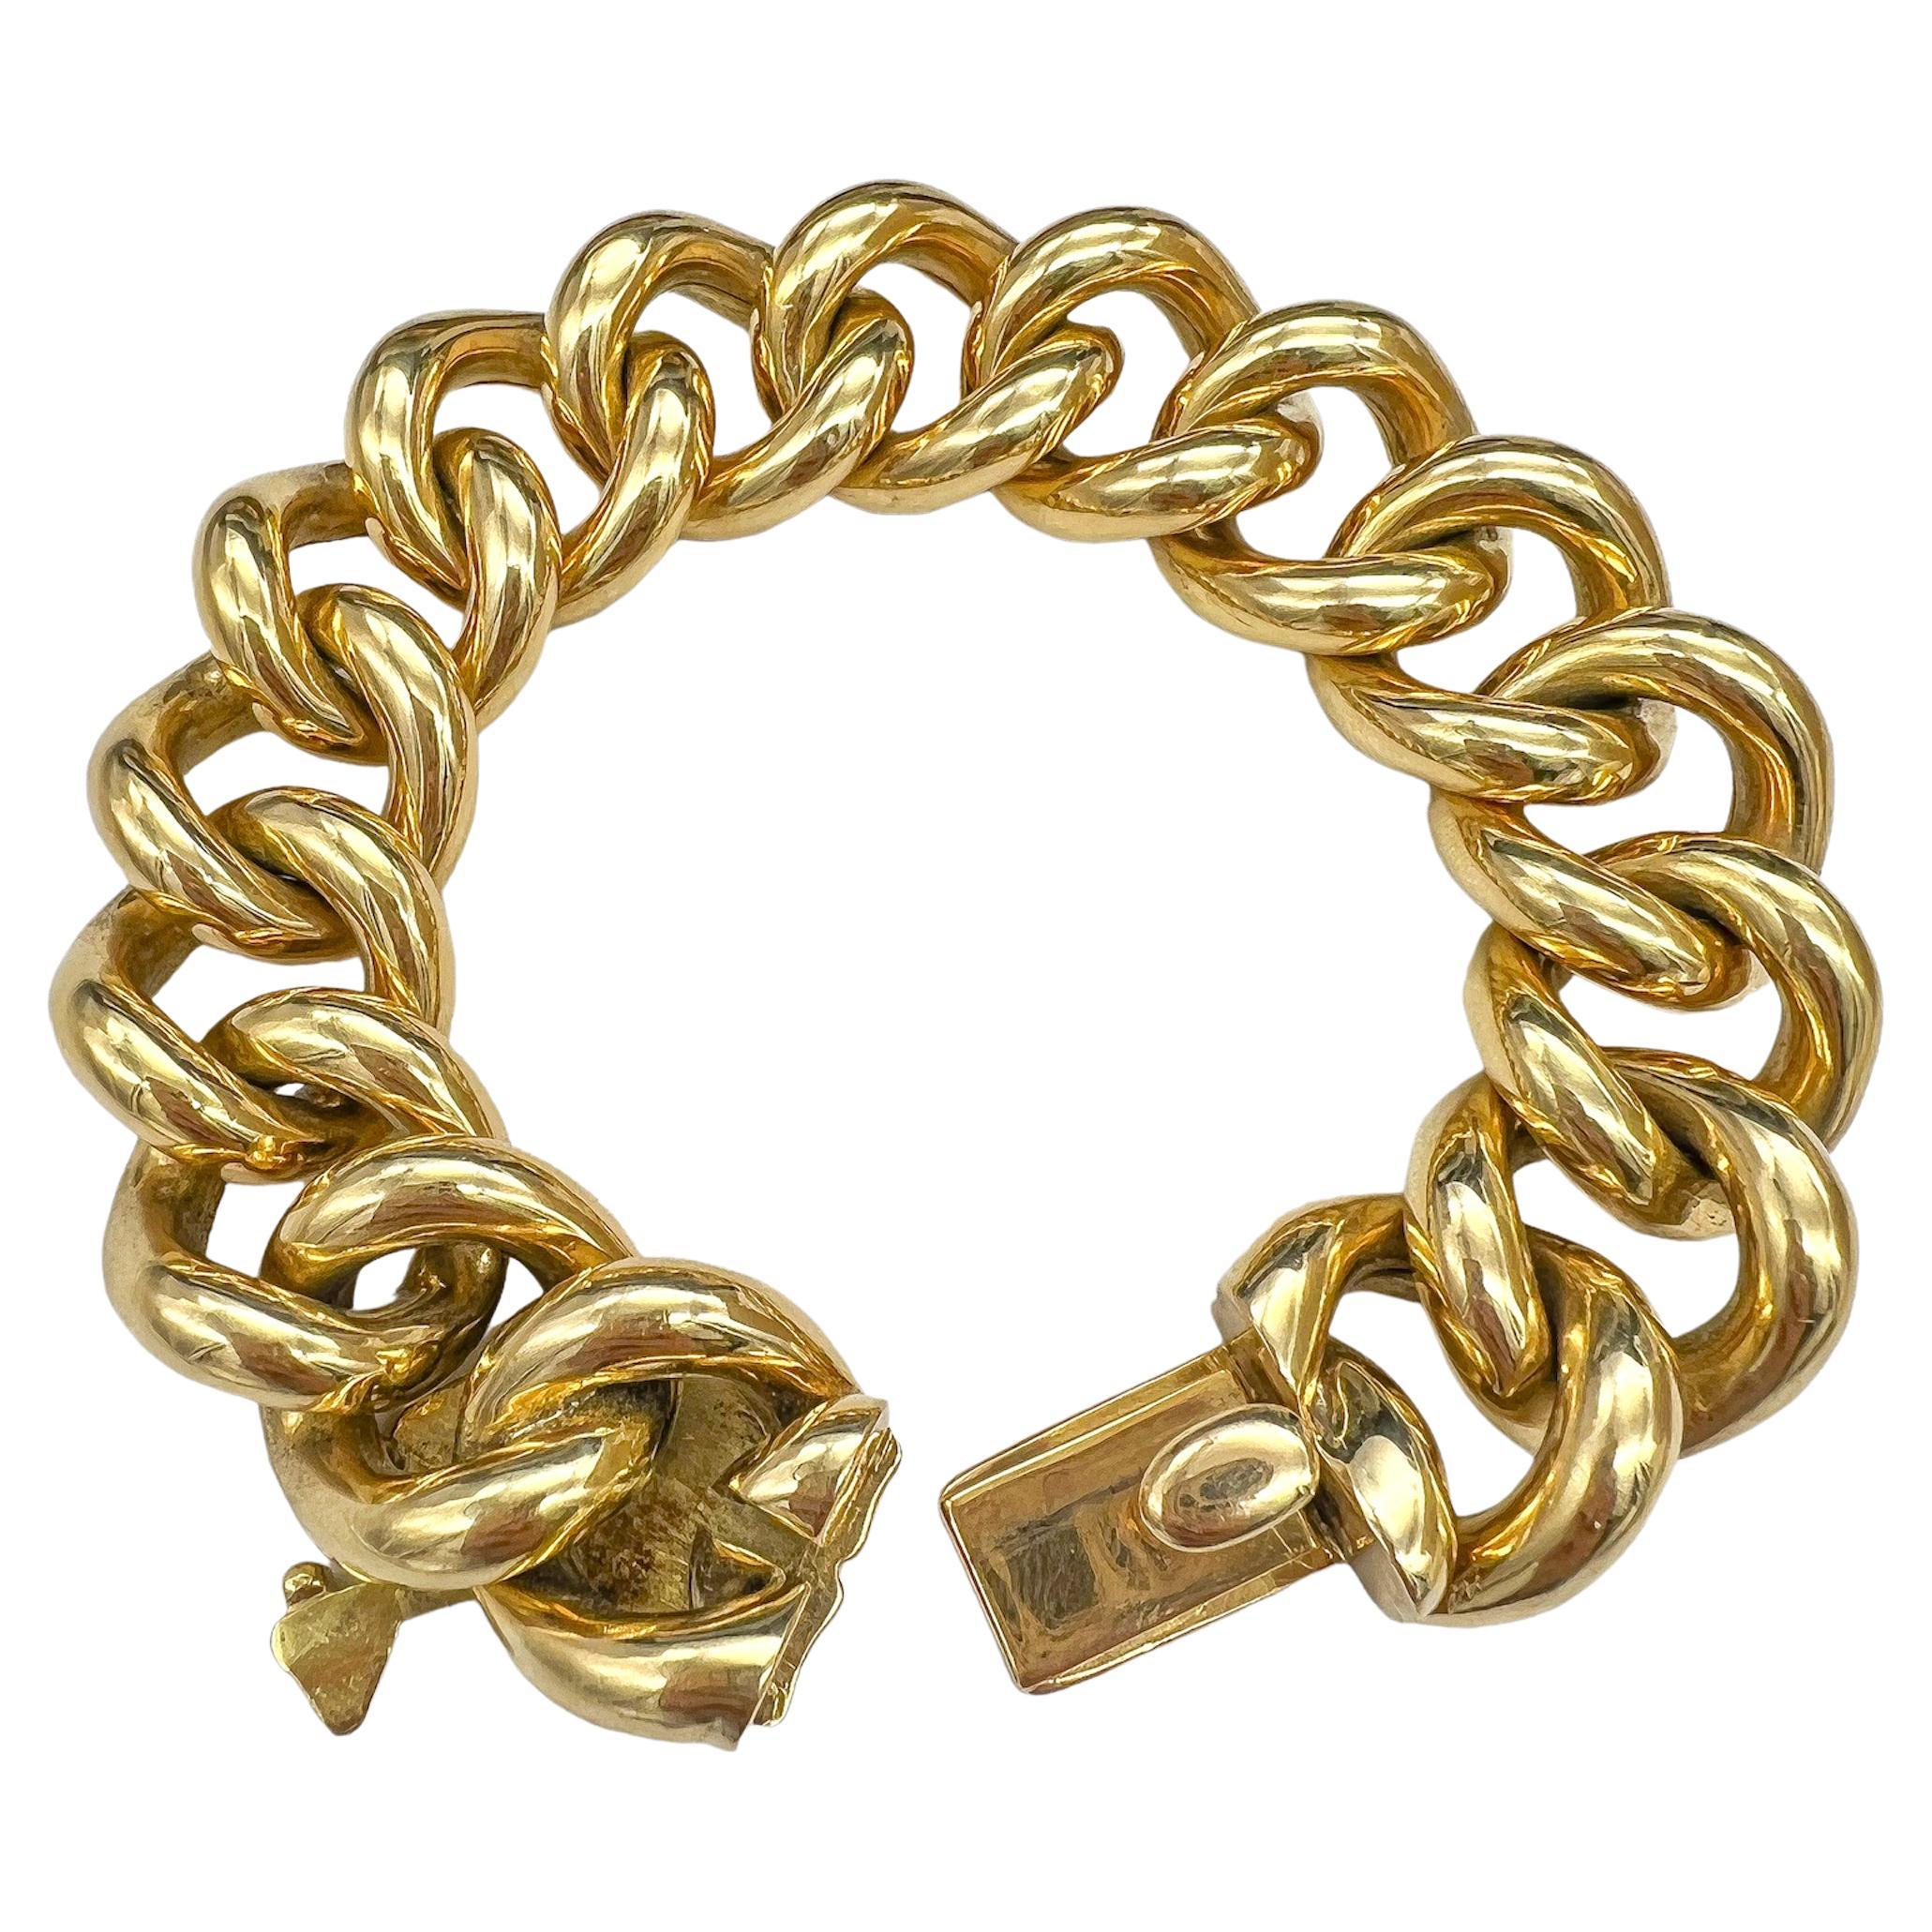 Solid 18K Yellow Gold Italian Made Cuban Link Bracelet 6.5